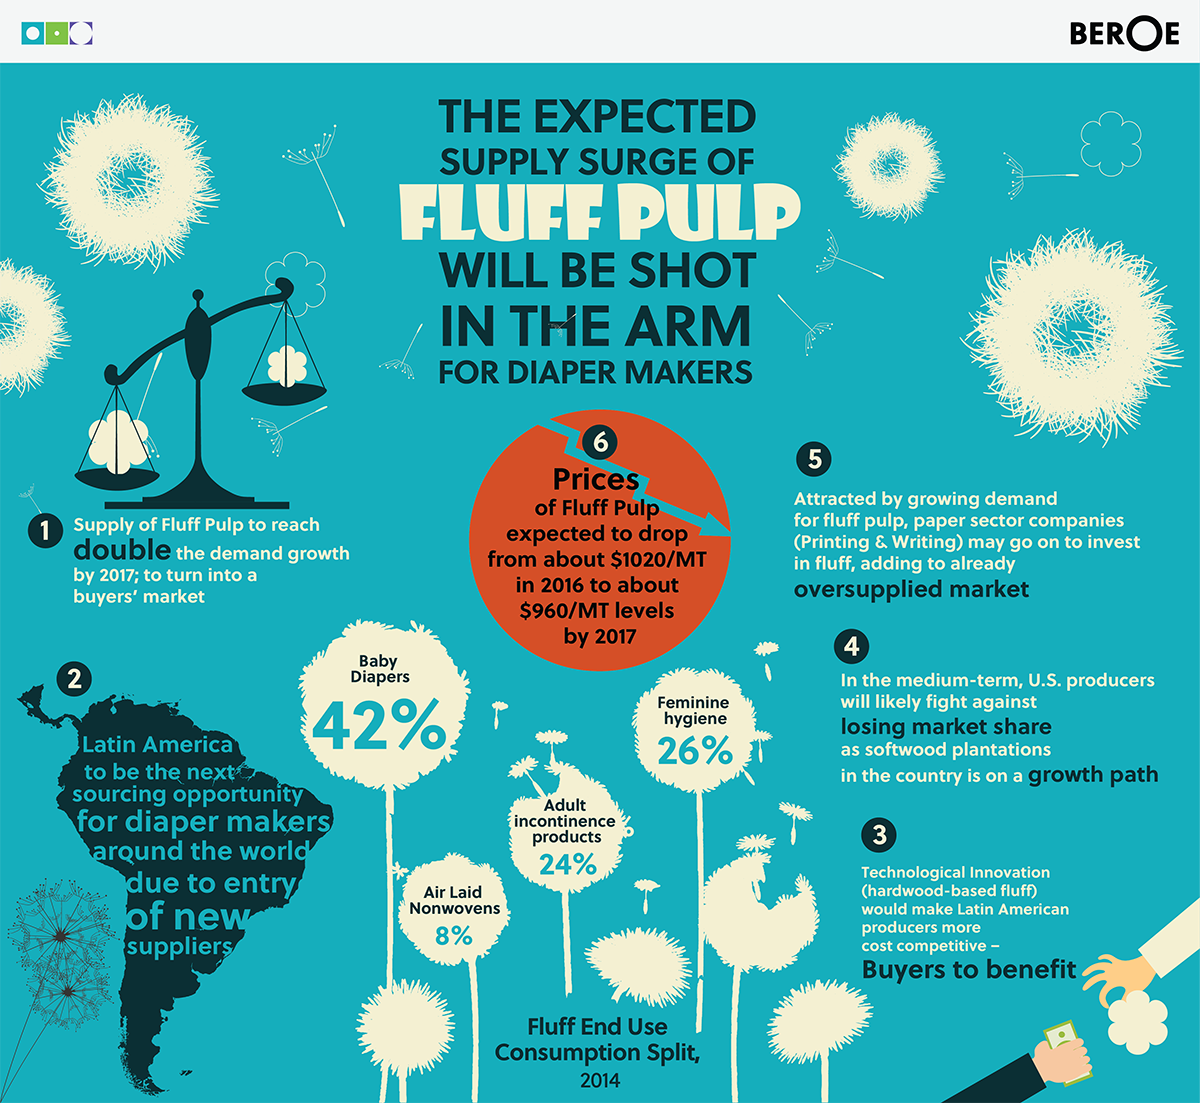 Fluff Pulp diaper makers Infographic BeroeInc